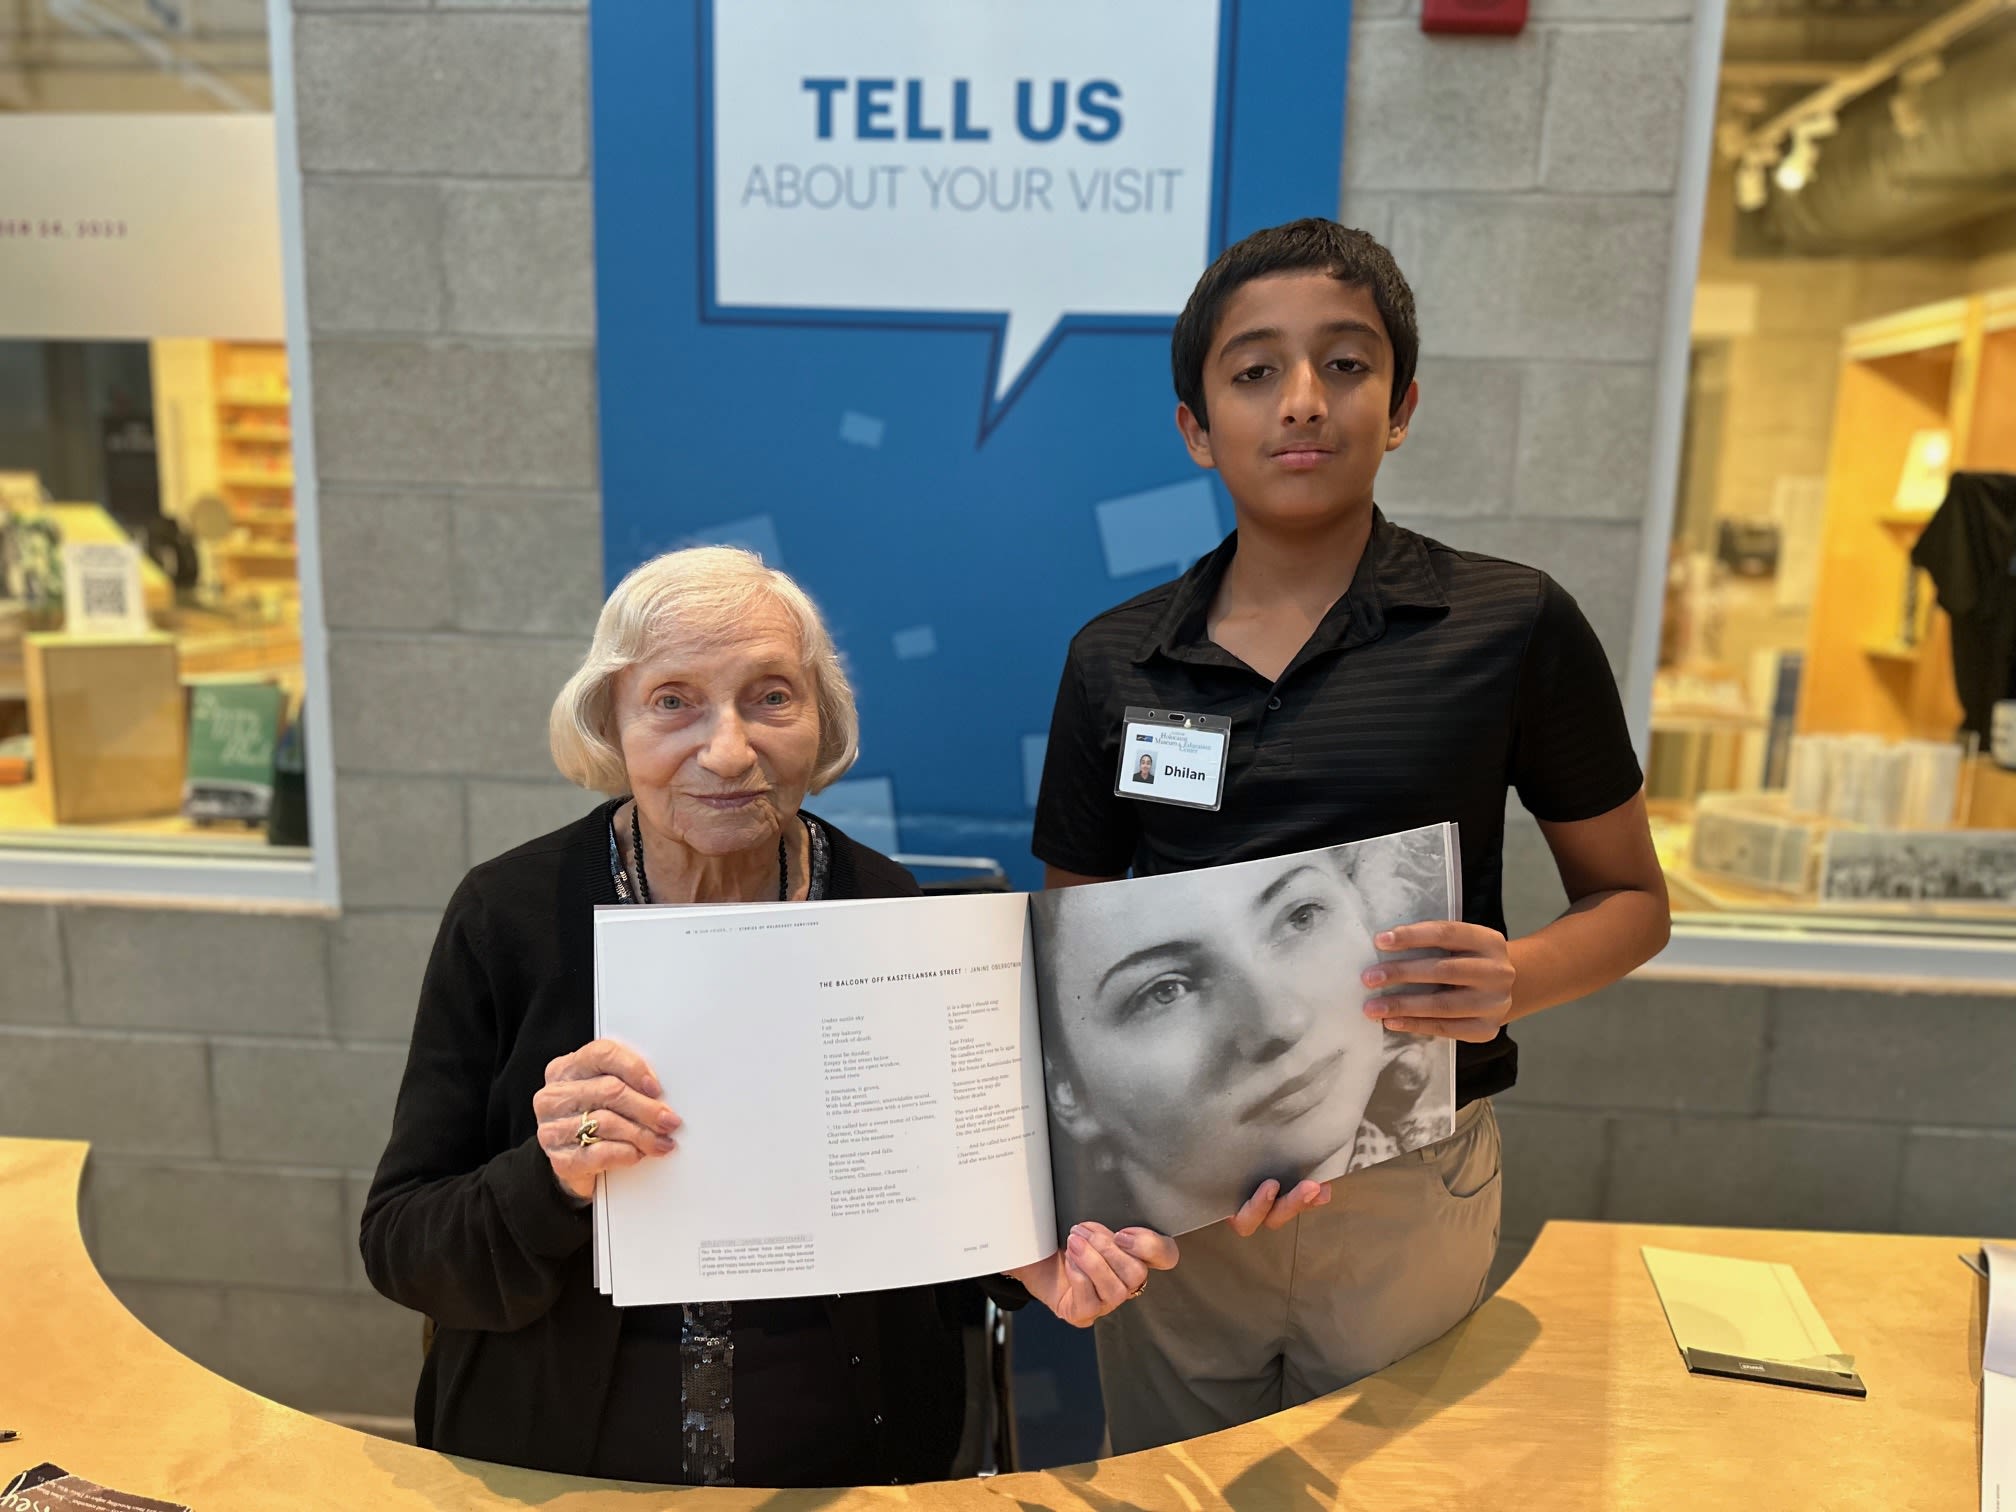 Teen and Holocaust survivor who met volunteering become ‘dynamic duo’